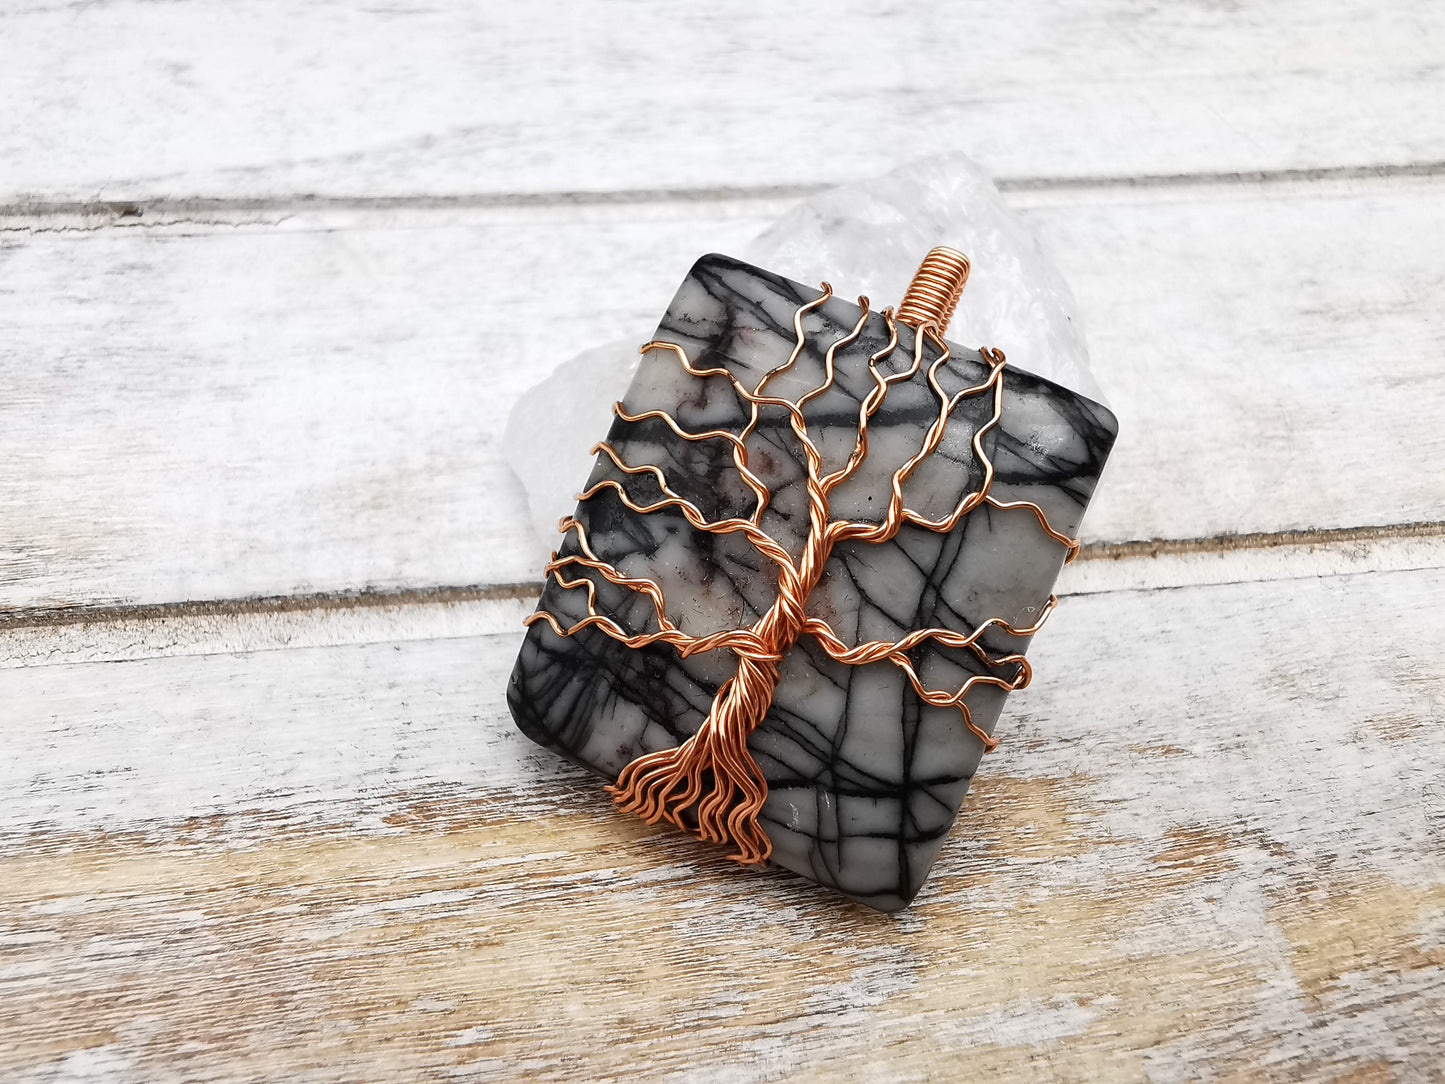 Jaspis Lebensbaum Anhänger | Baum des Lebens | Yggdrasil | Schmuckdraht | Handmade | wire wrap pendant | Einzelstück